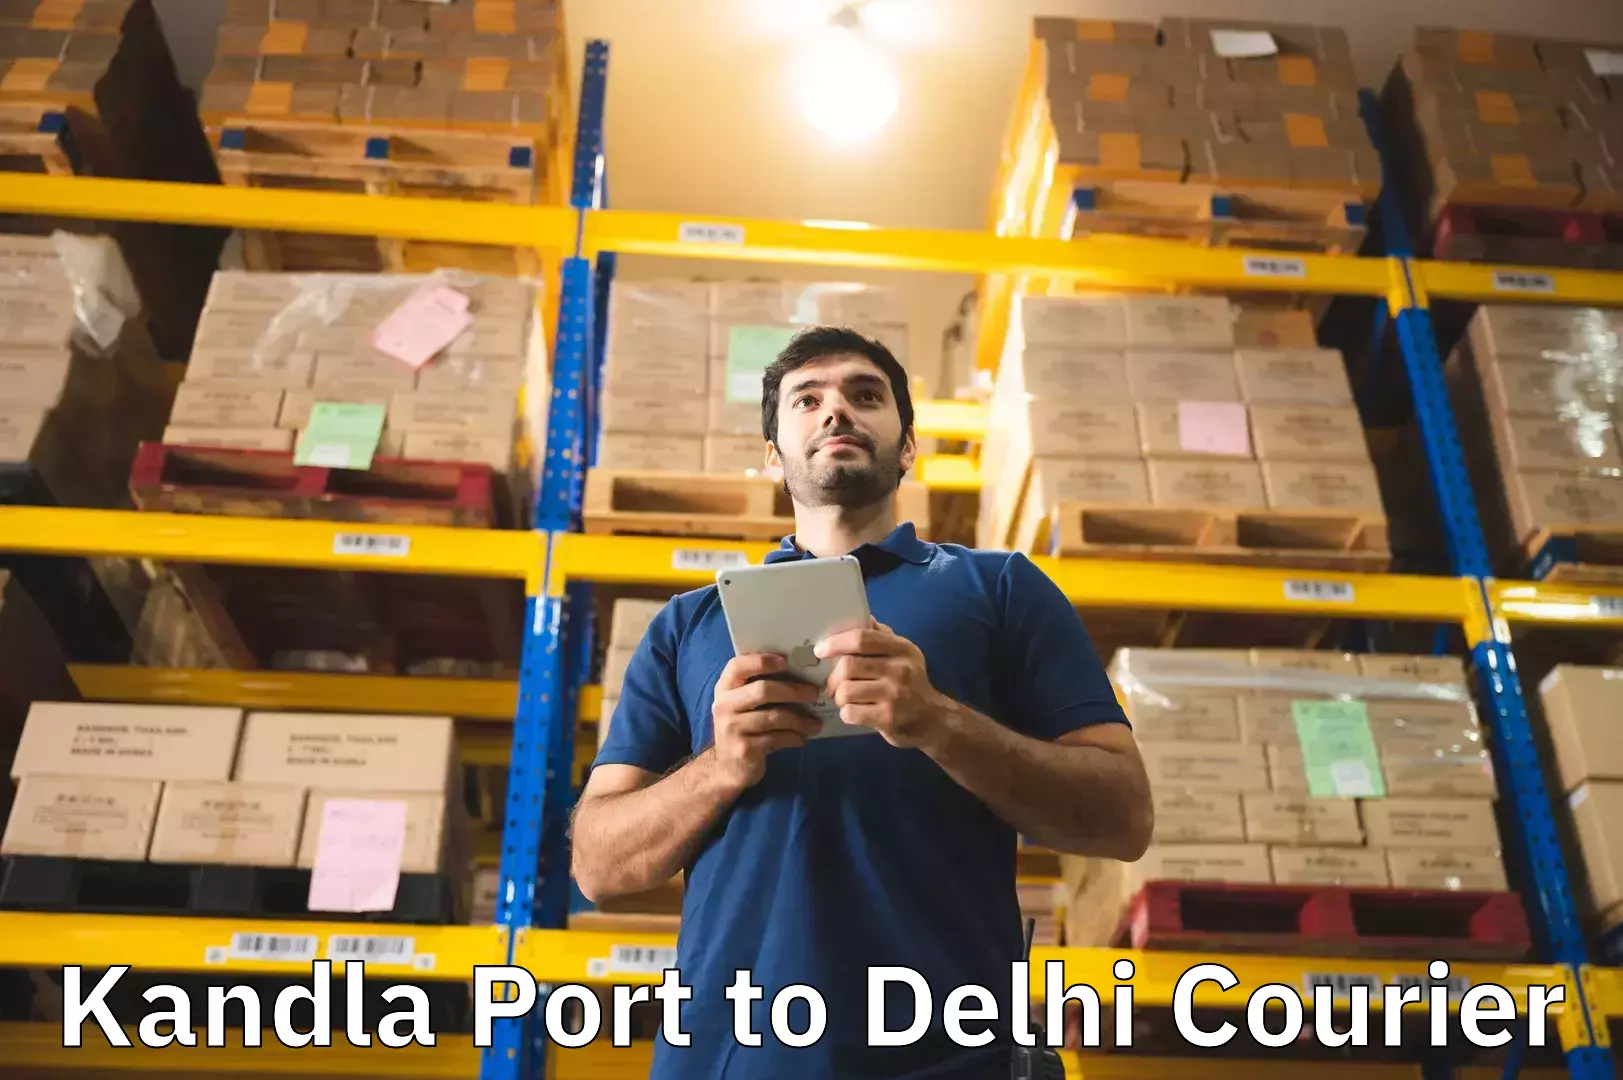 Luggage delivery app Kandla Port to Delhi